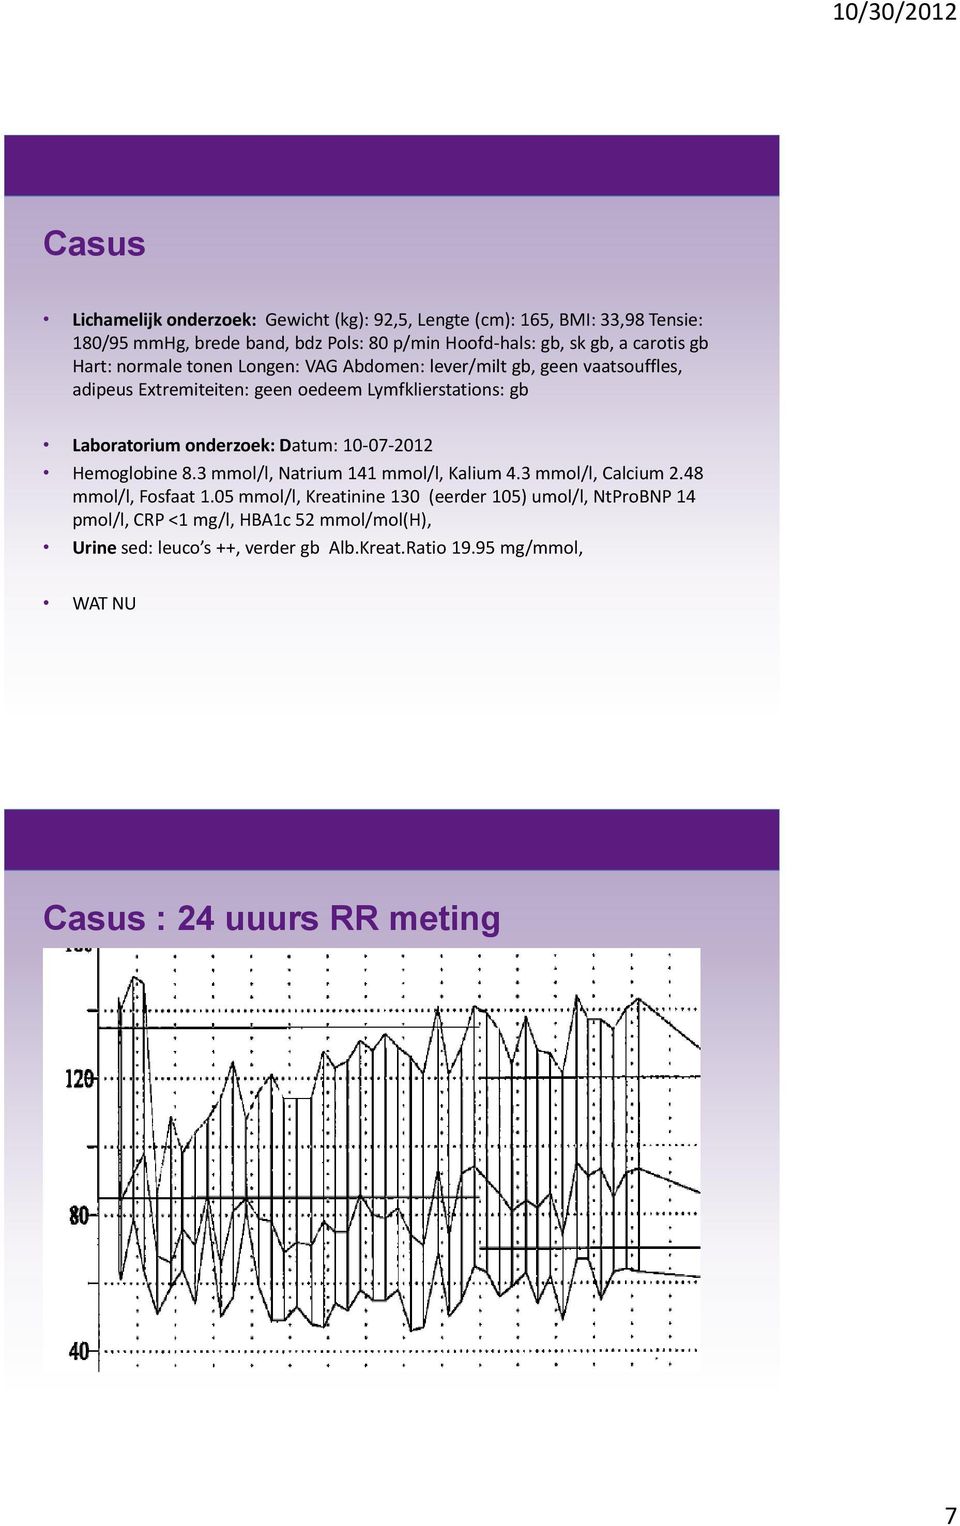 onderzoek: Datum: 10-07-2012 Hemoglobine 8.3 mmol/l, Natrium 141 mmol/l, Kalium 4.3 mmol/l, Calcium 2.48 mmol/l, Fosfaat 1.